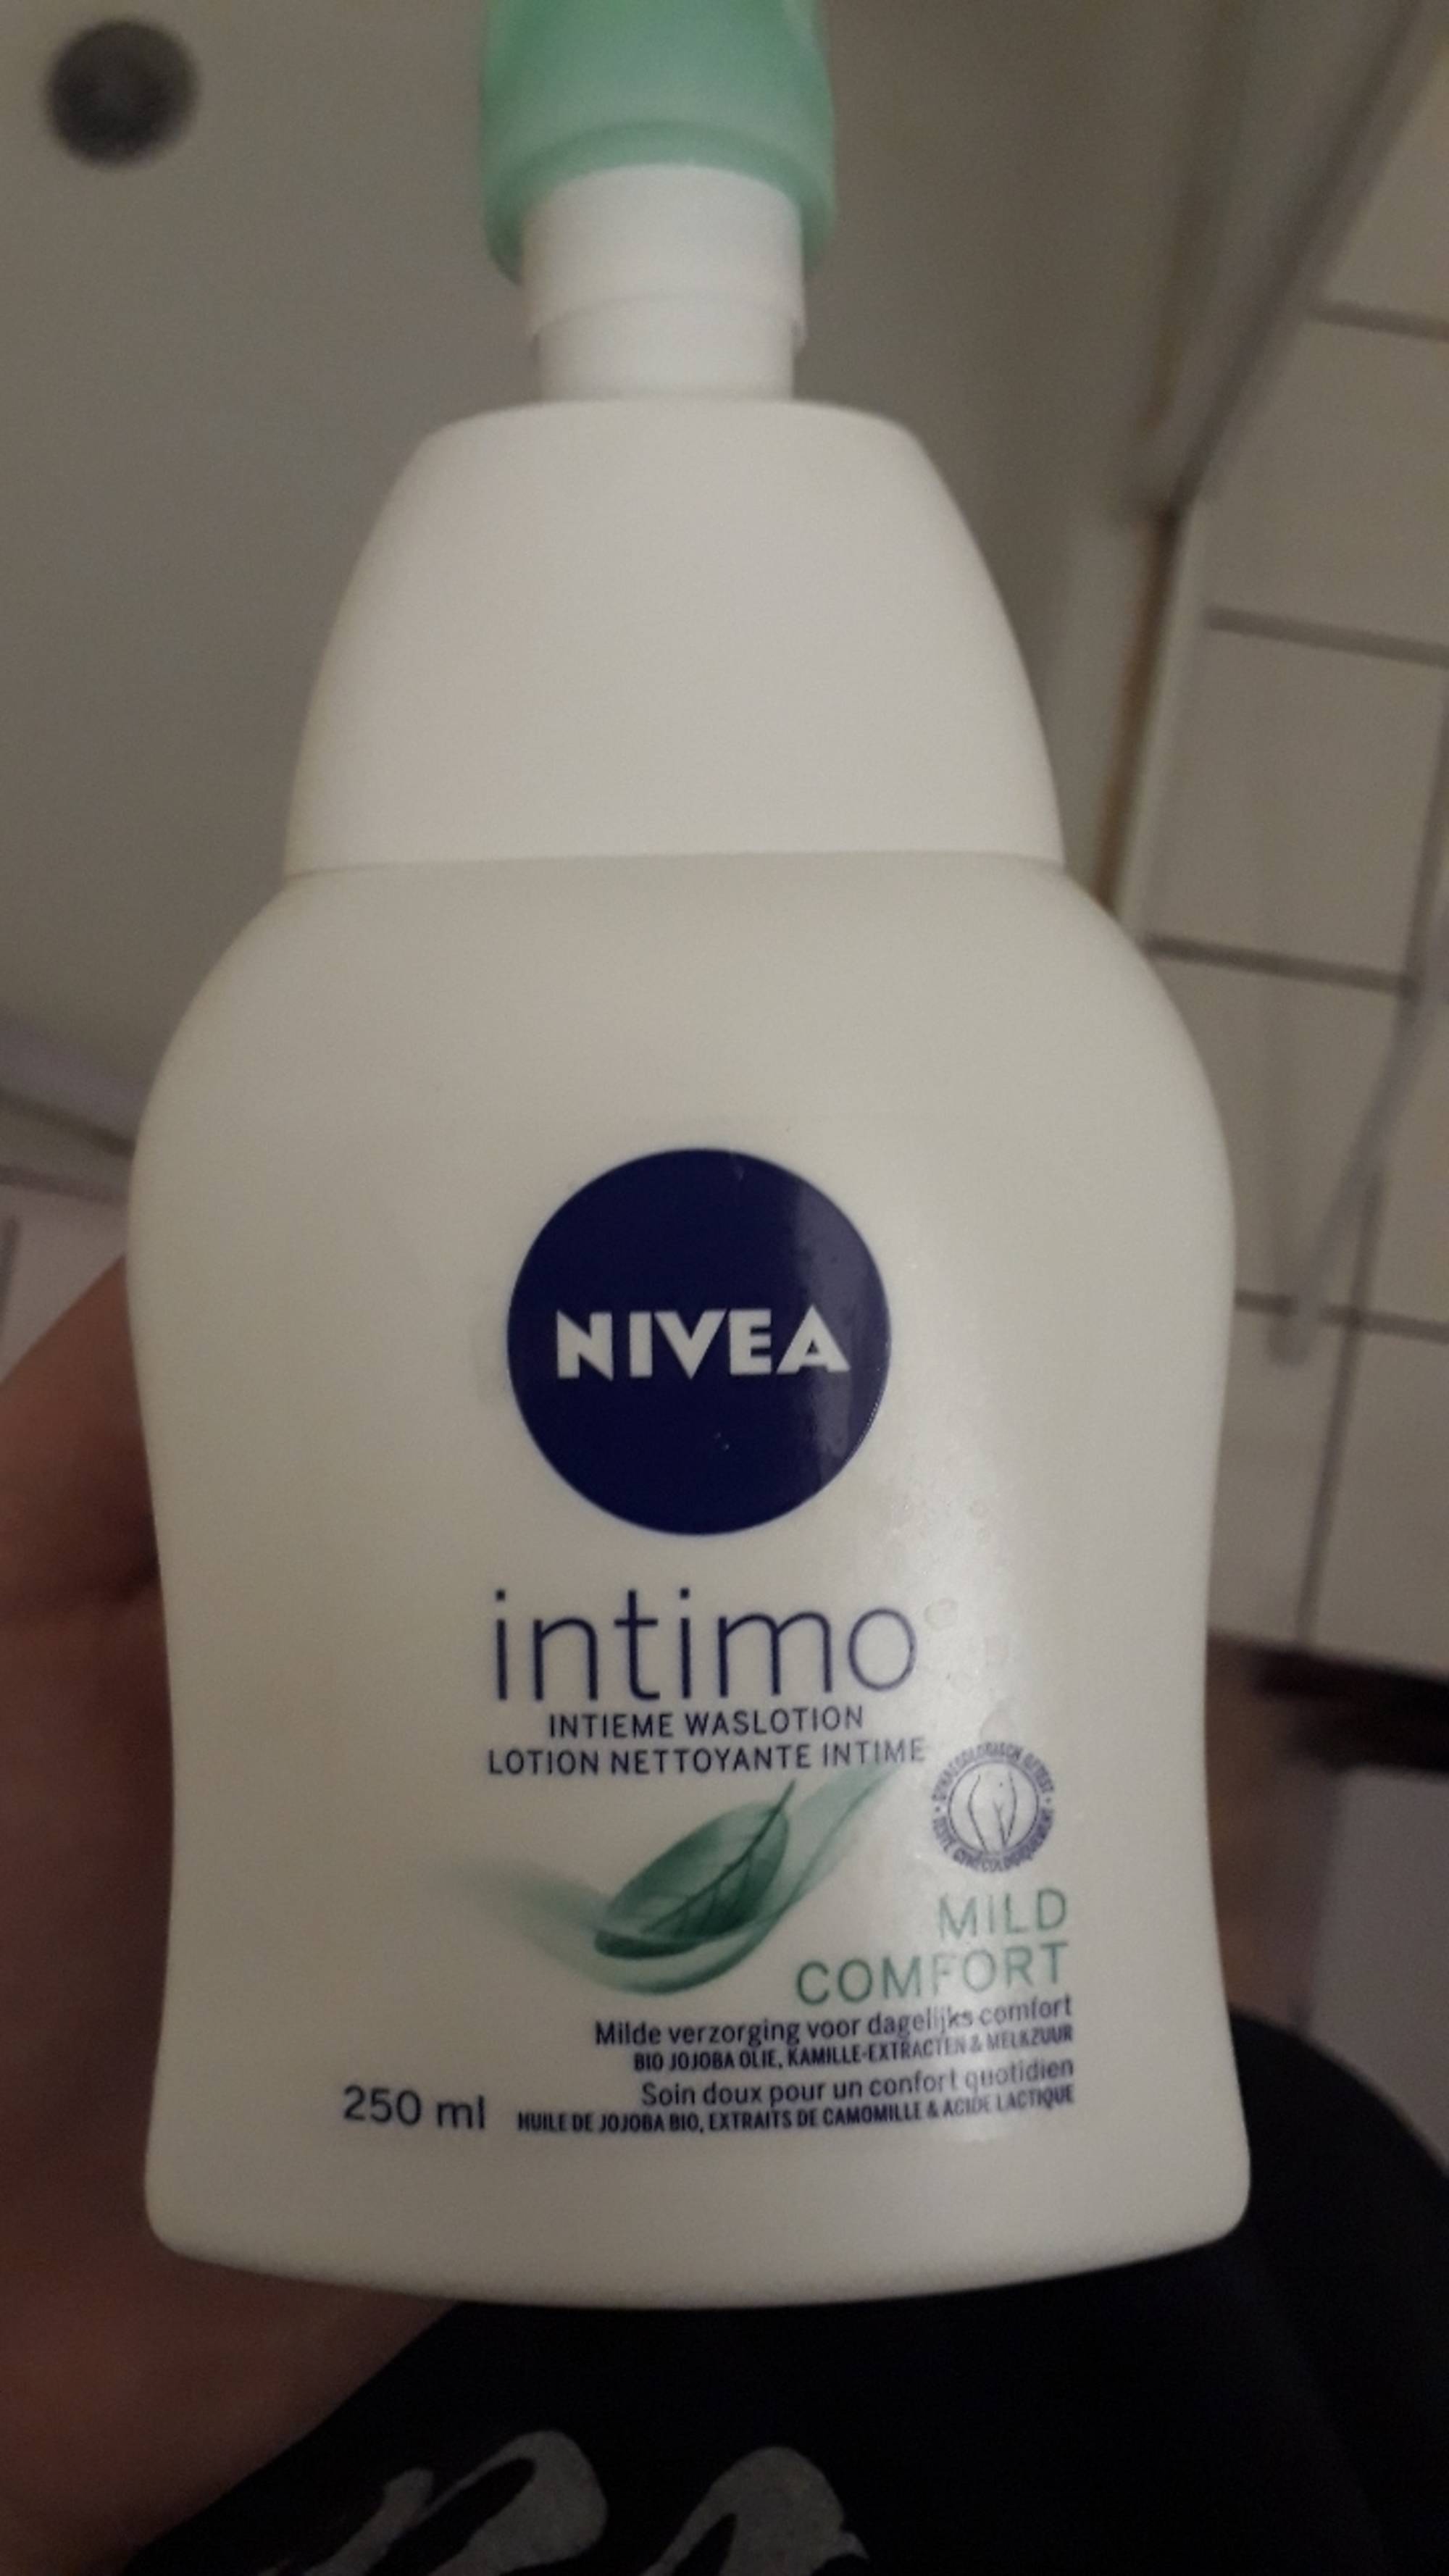 NIVEA - Intimo - Lotion nettoyante intime